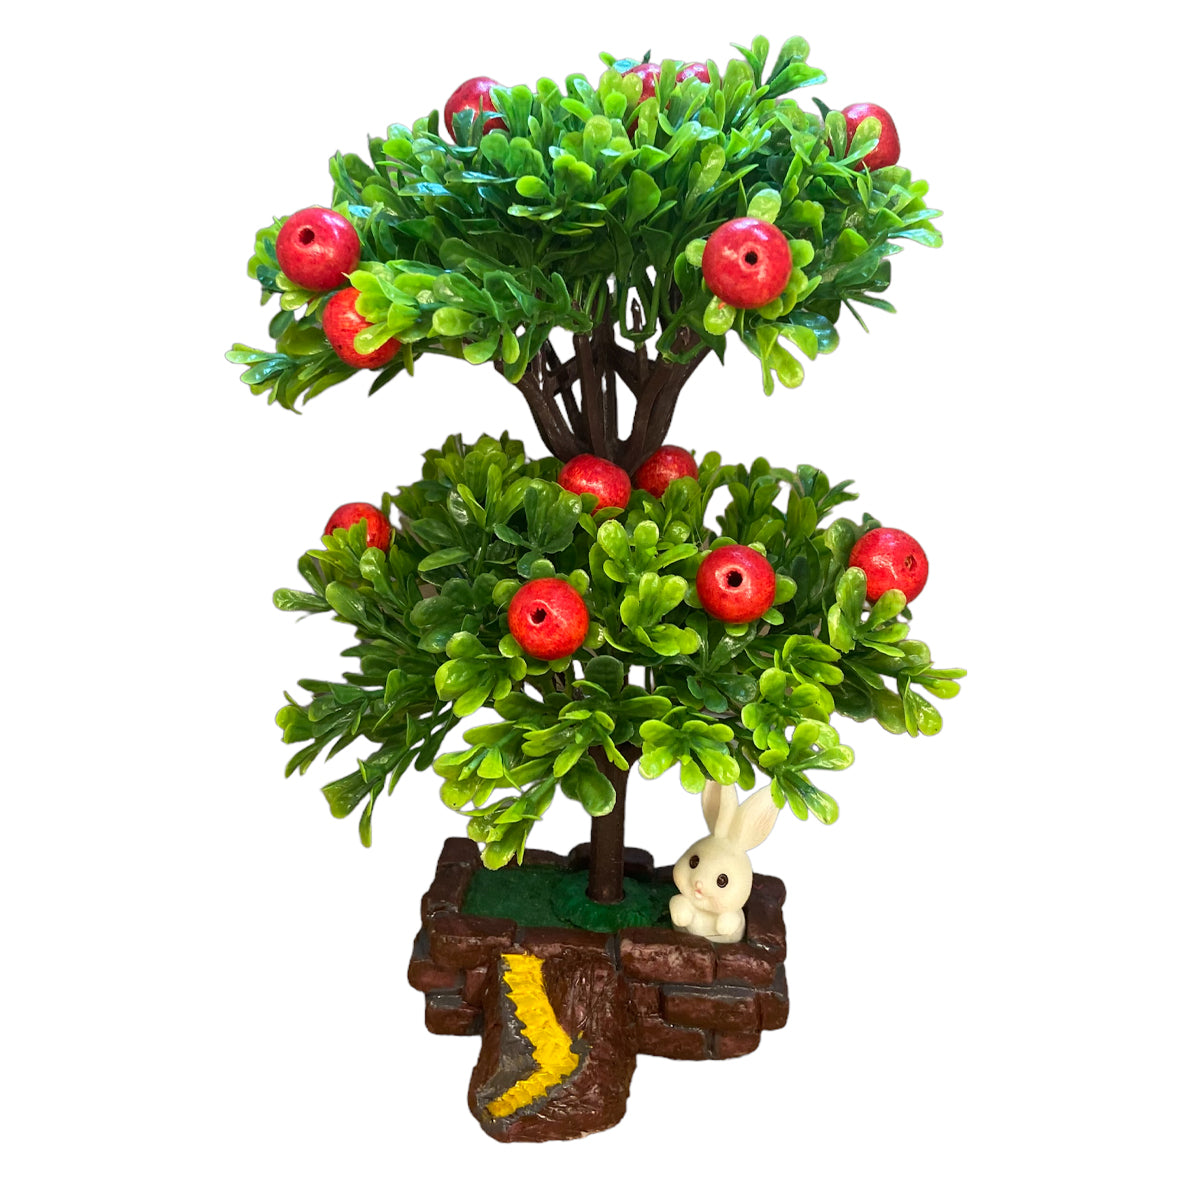 Rakakart- wonderful bonsai artificial plant with mini rabbit for home decor